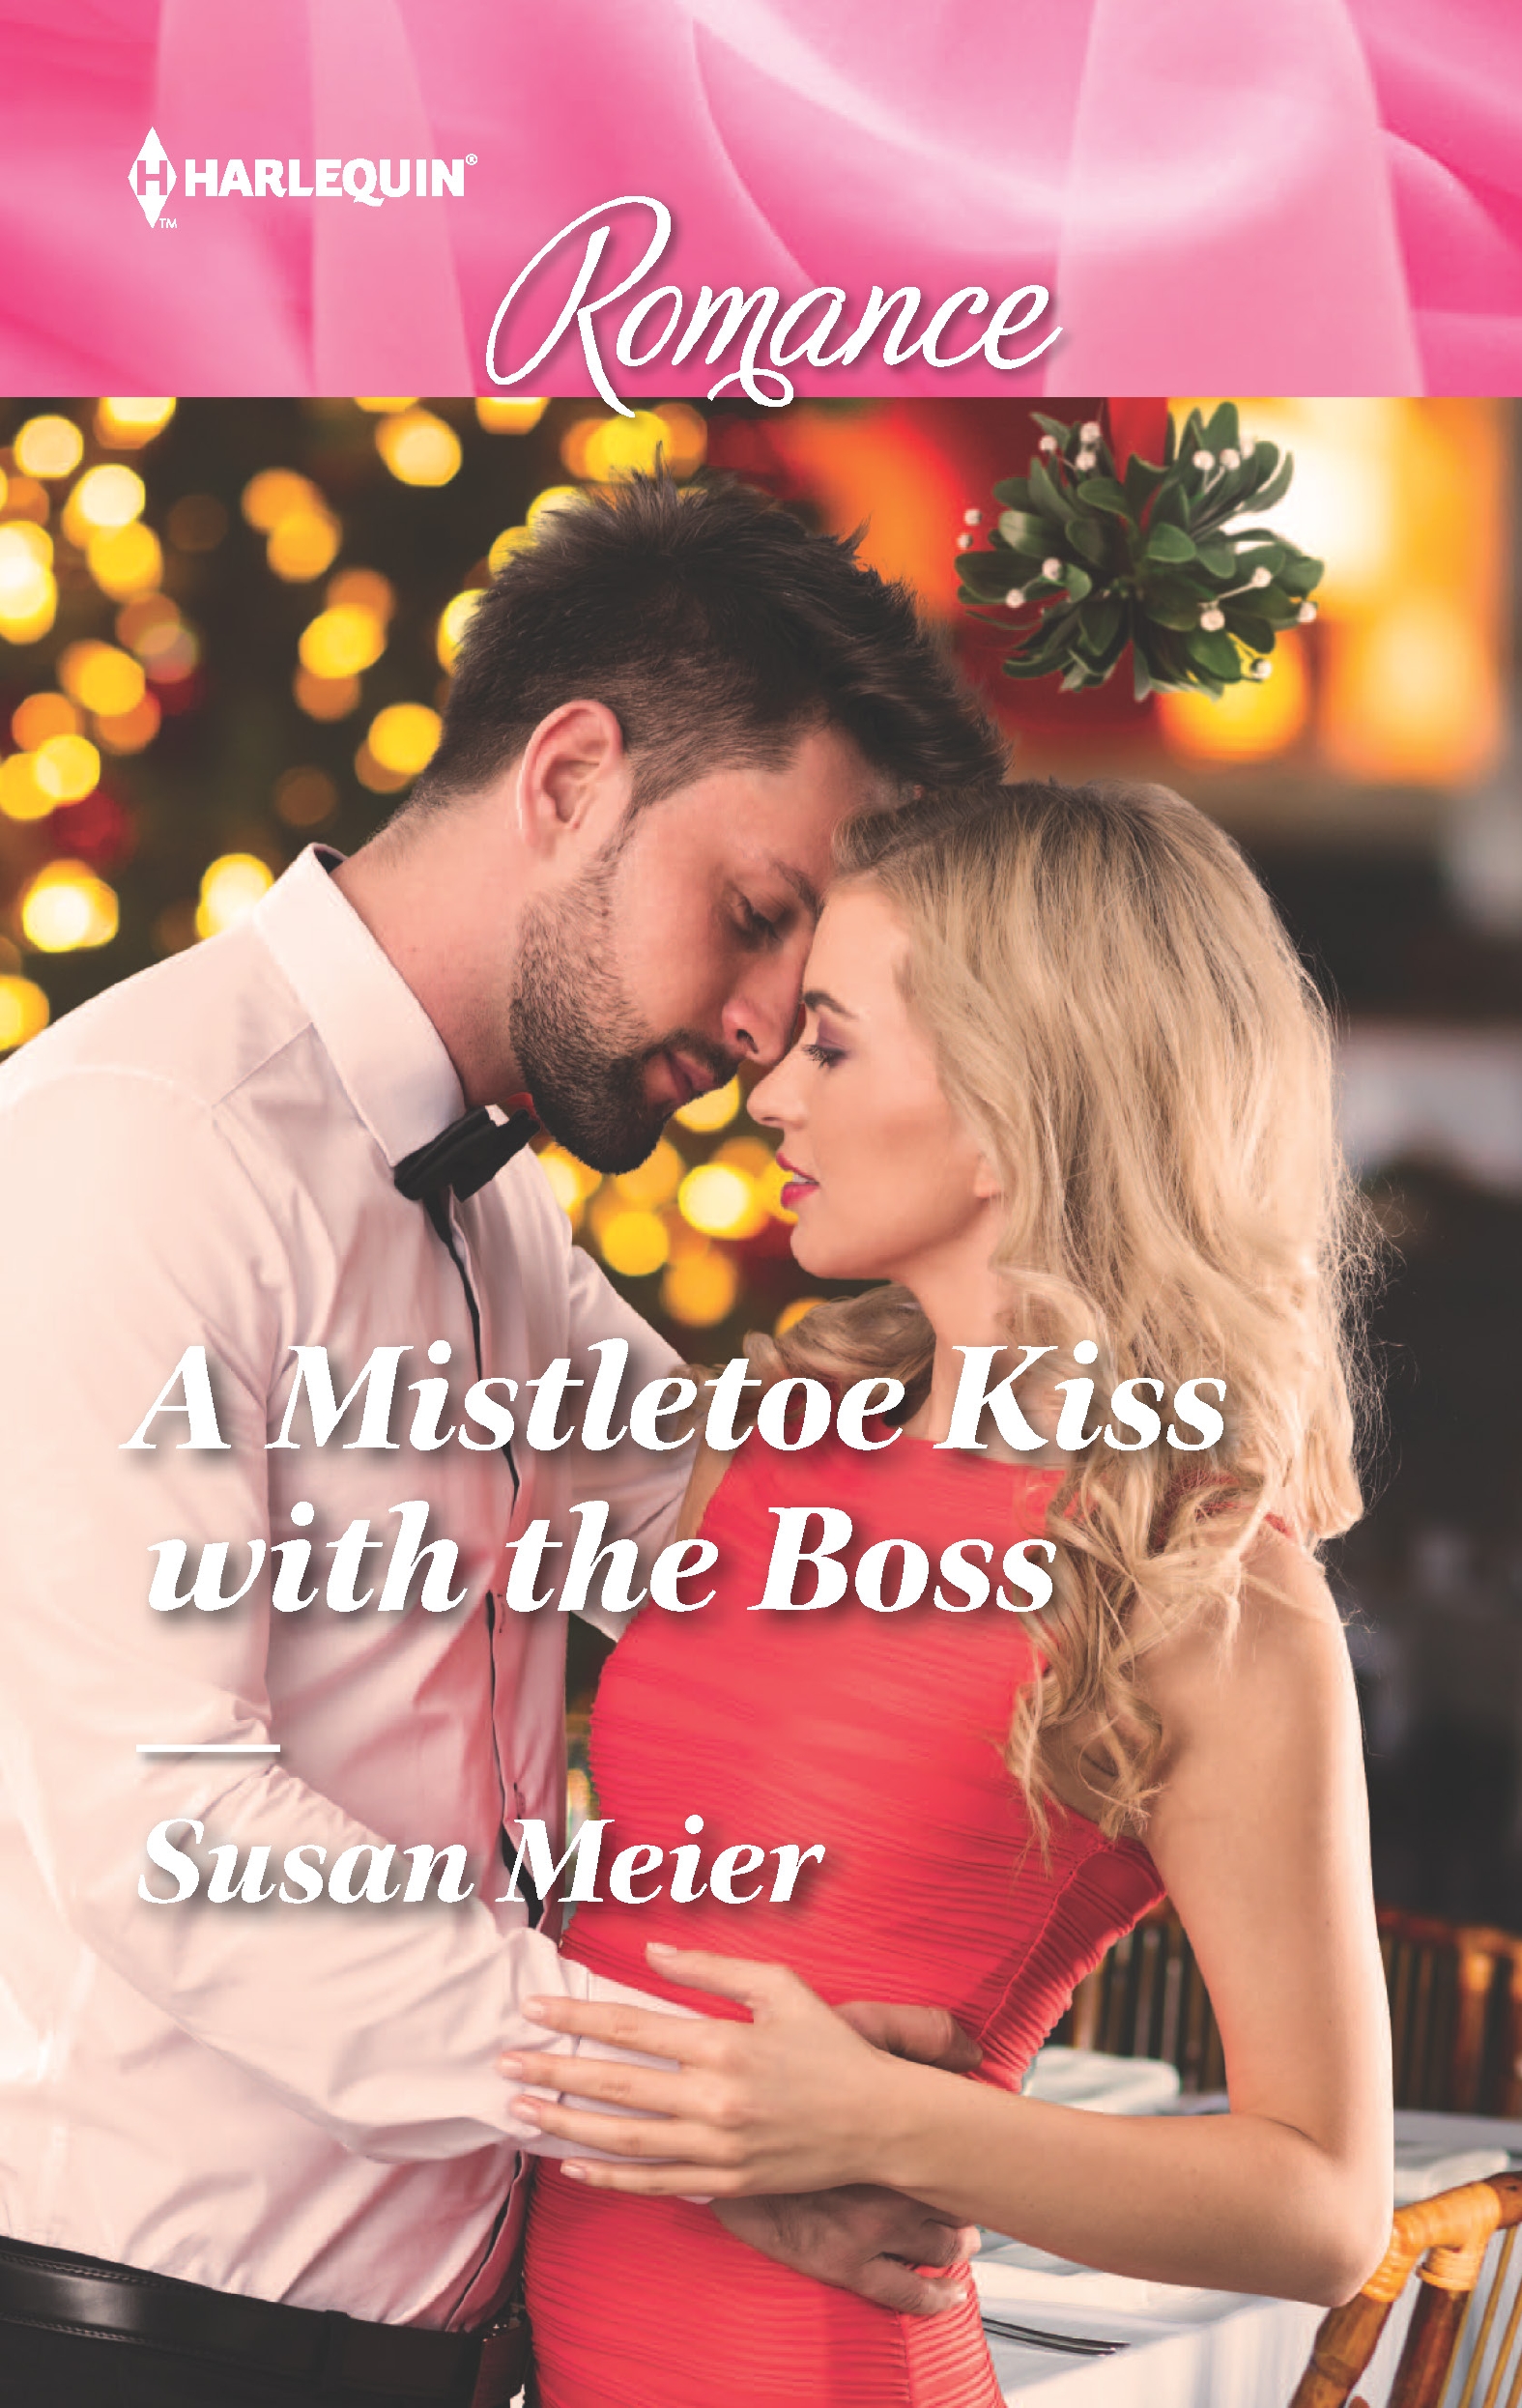 A Mistletoe Kiss with the Boss (2016) by Susan Meier